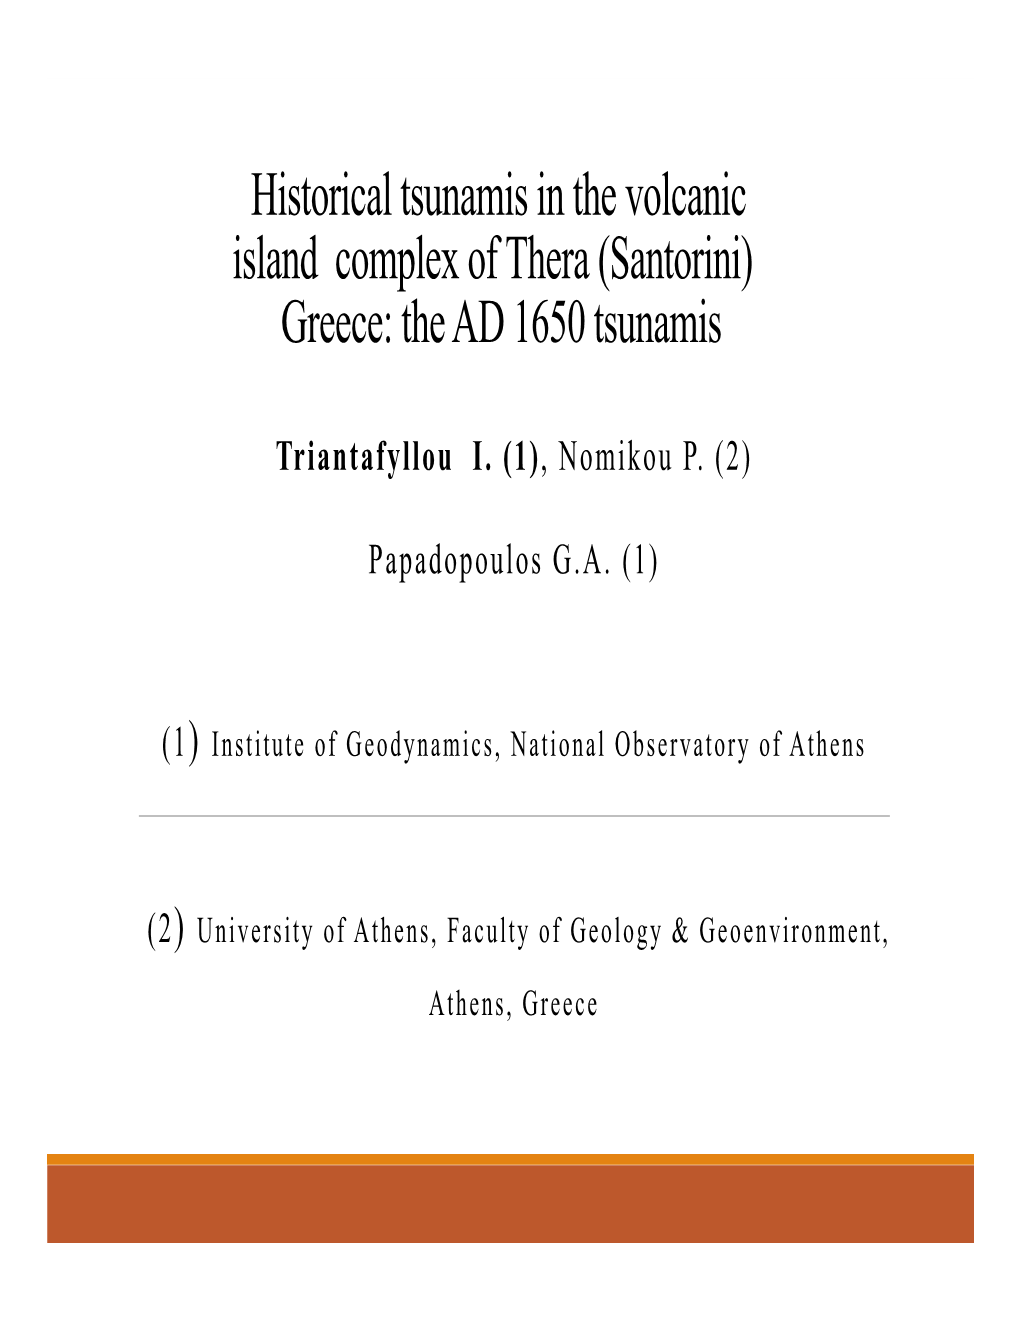 Historical Tsunamis in the Volcanic Island Complex of Thera (Santorini) Greece: the AD 1650 Tsunamis